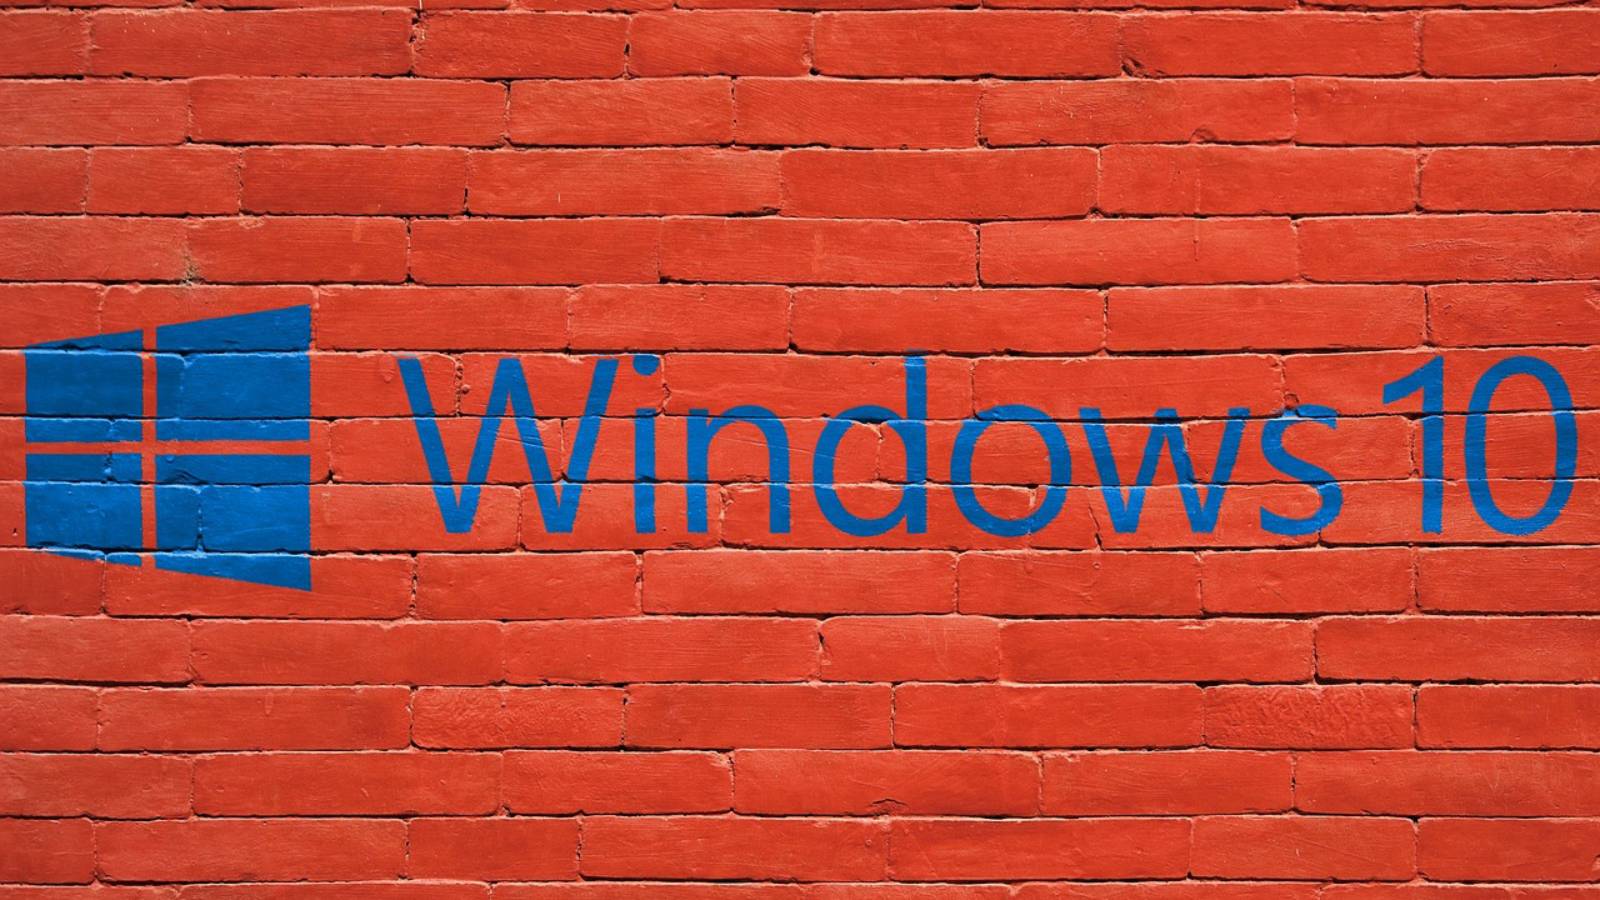 Windows 10 problema